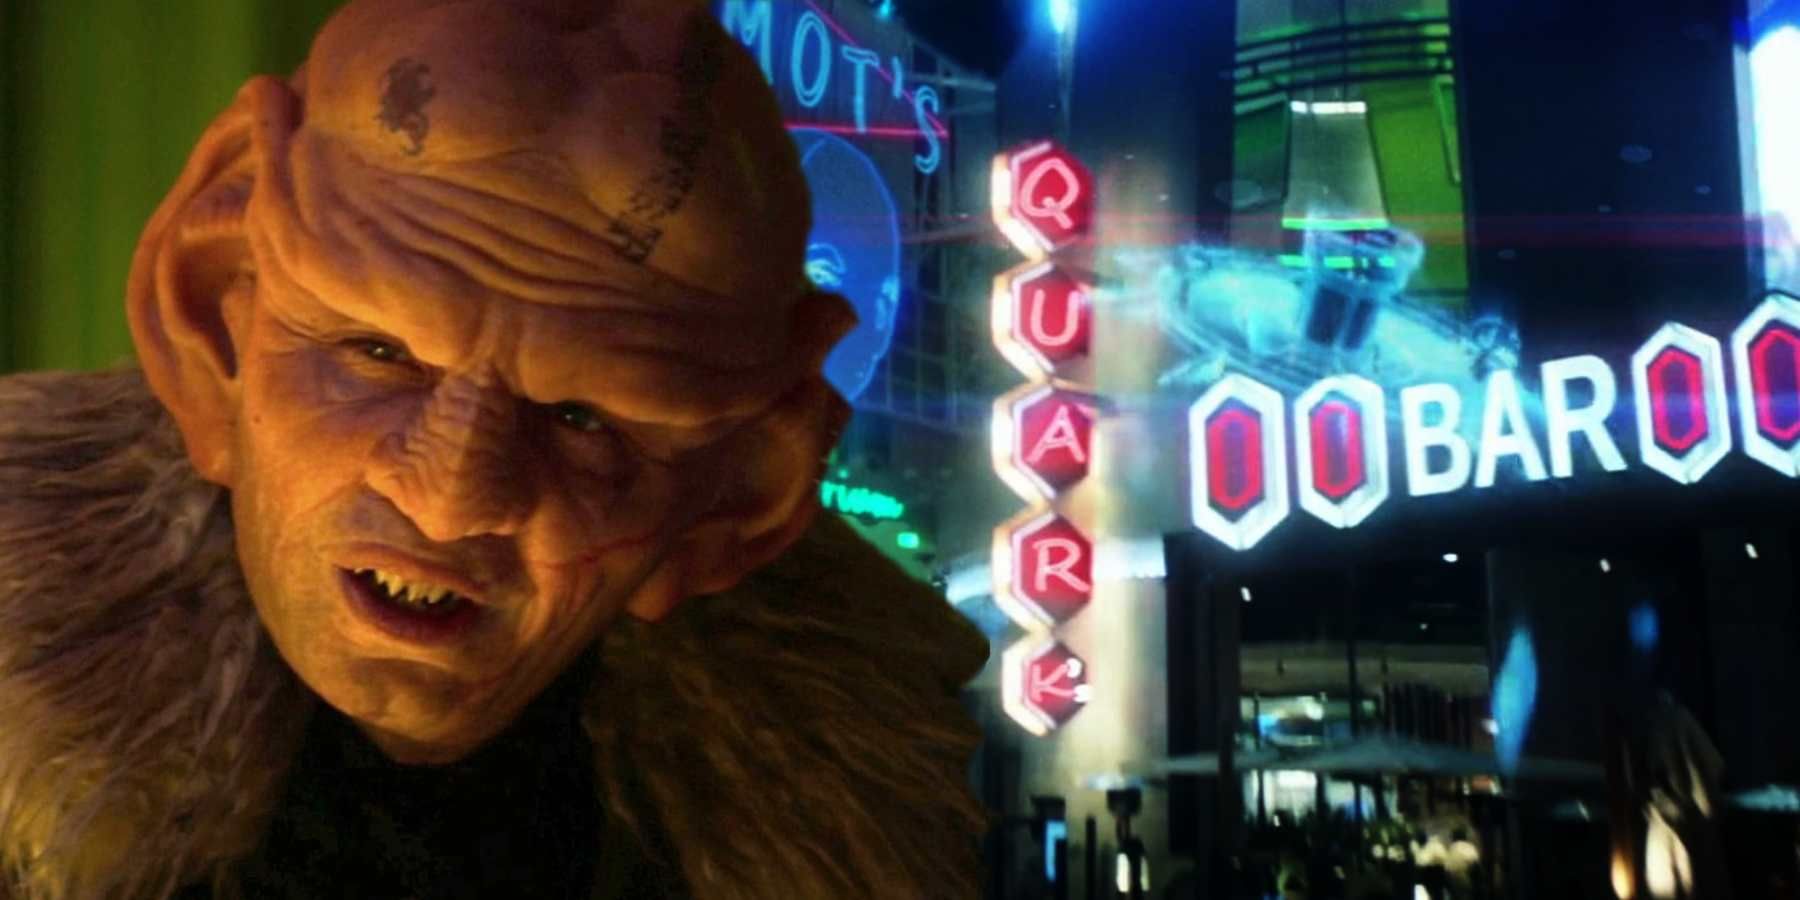 Sneed and Quark's Bar in Star Trek: Picard